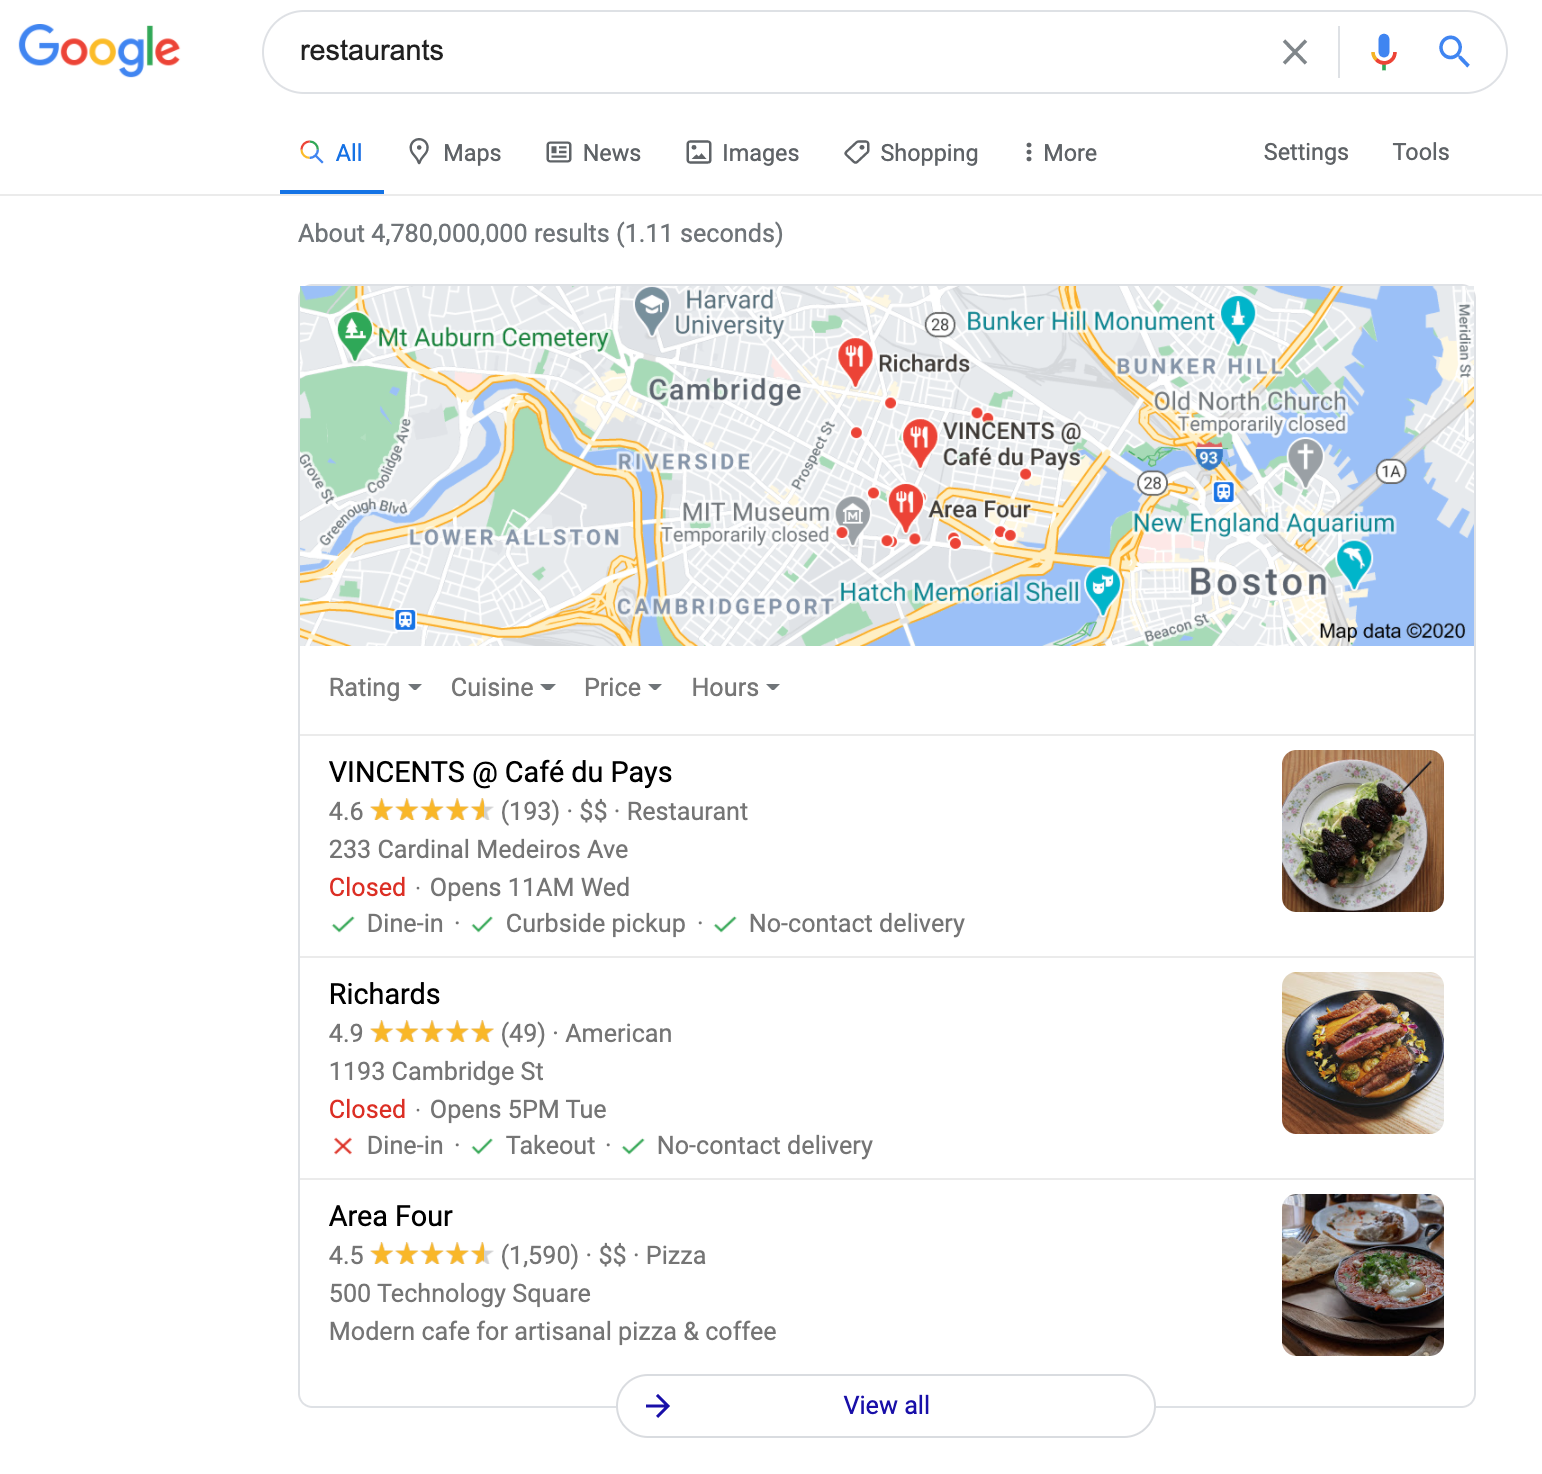 Google Maps Marketing Strategy: The Ultimate Cheat Sheet